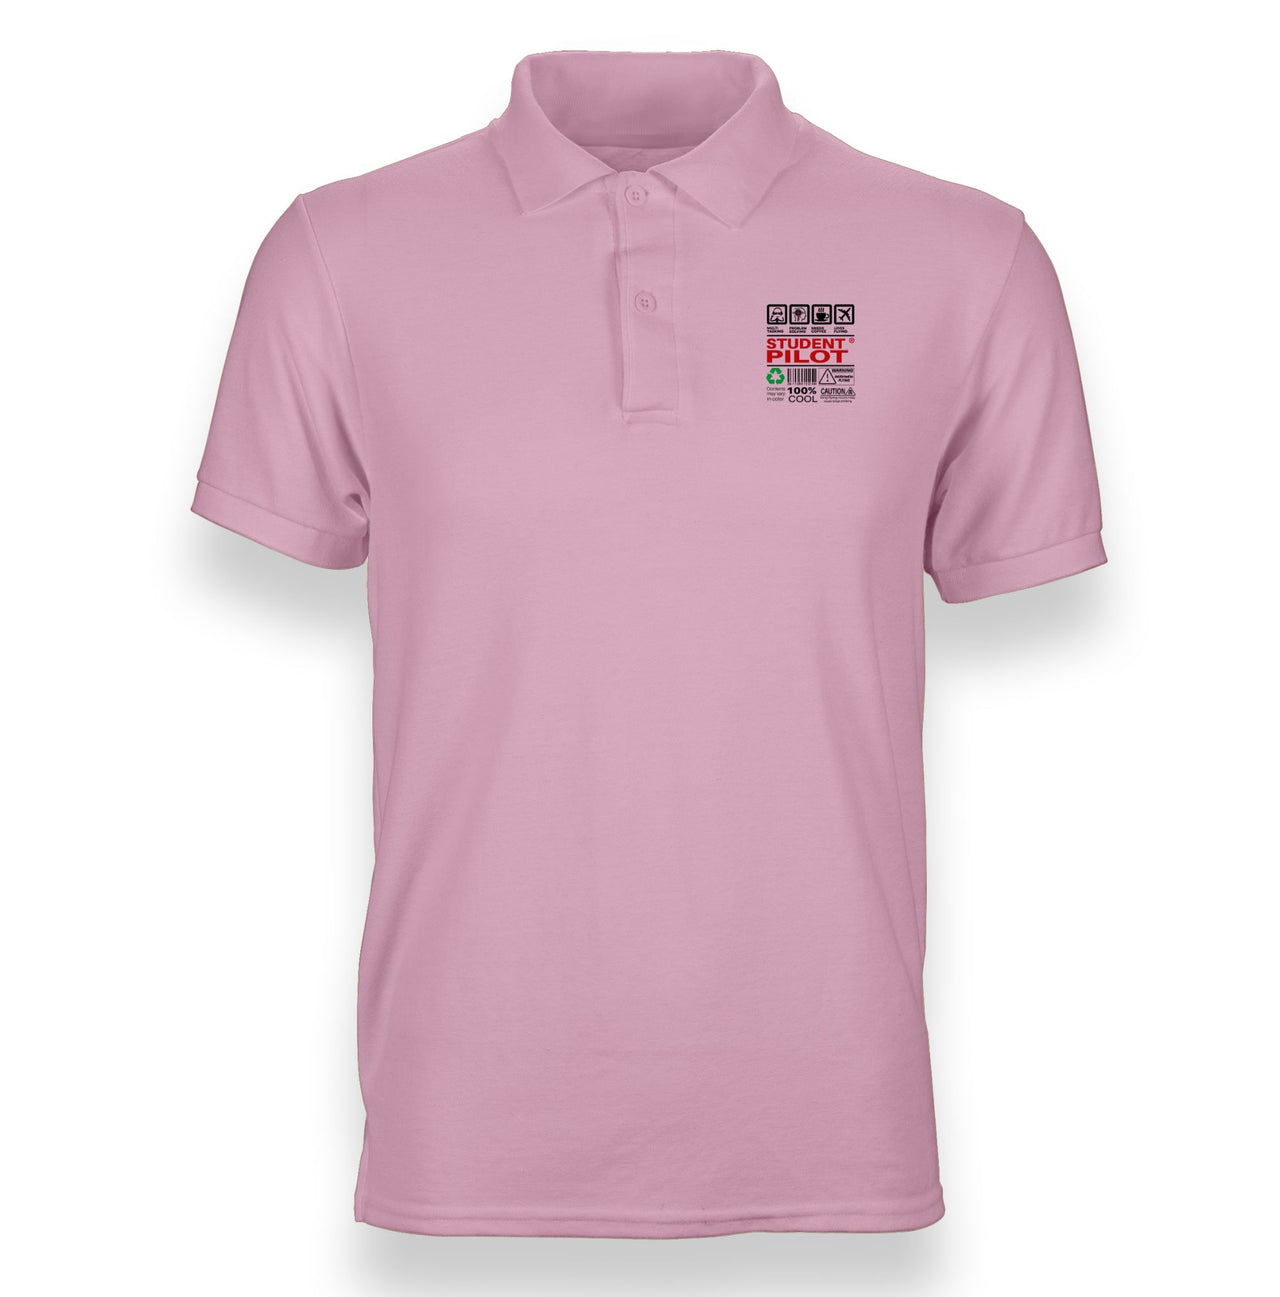 Student Pilot Label Designed "WOMEN" Polo T-Shirts